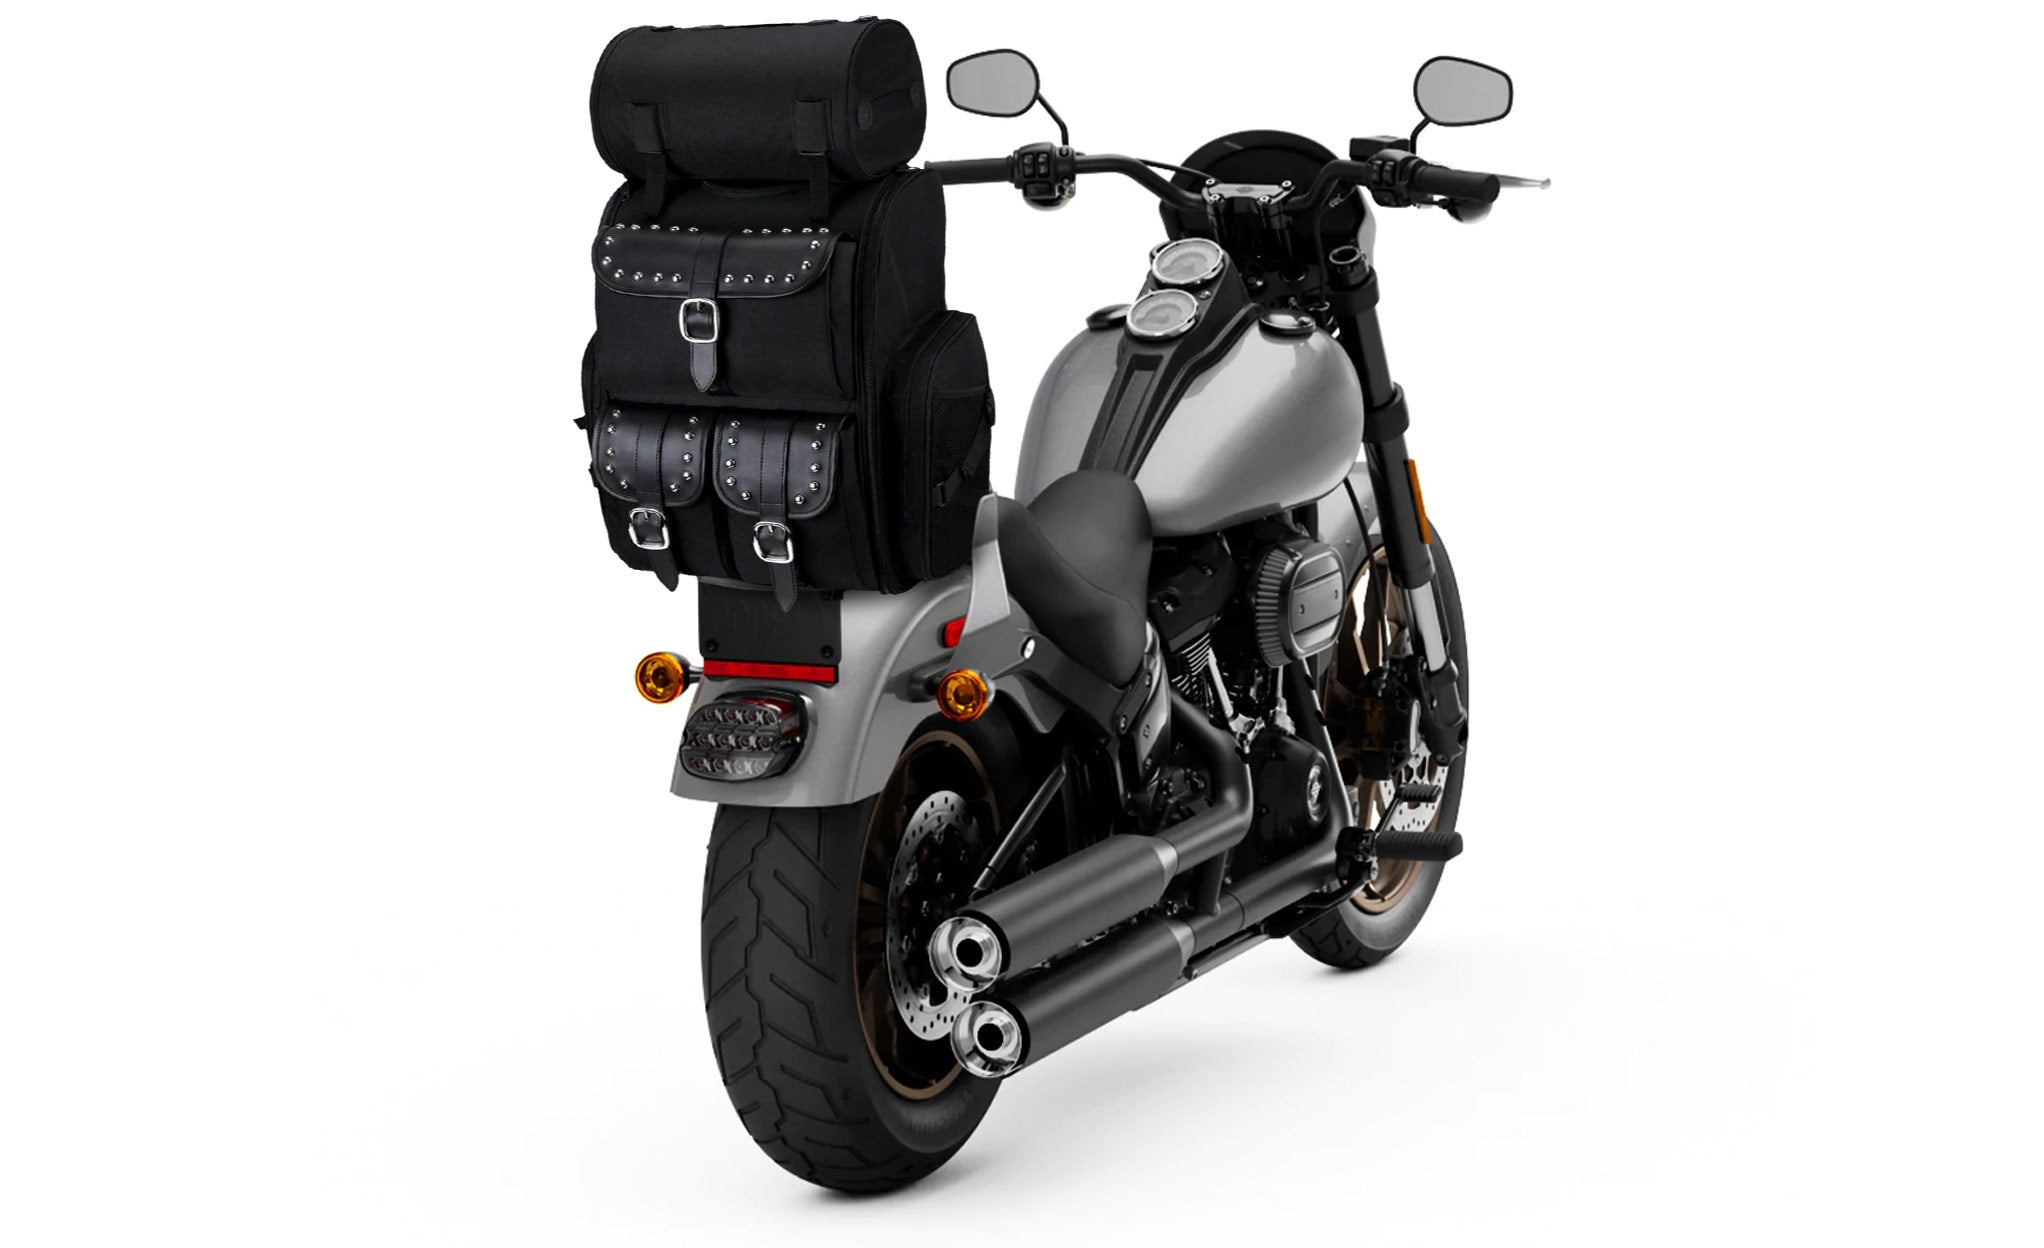 Viking Highway Extra Large Studded Hyosung Motorcycle Sissy Bar Bag Bag on Bike View @expand